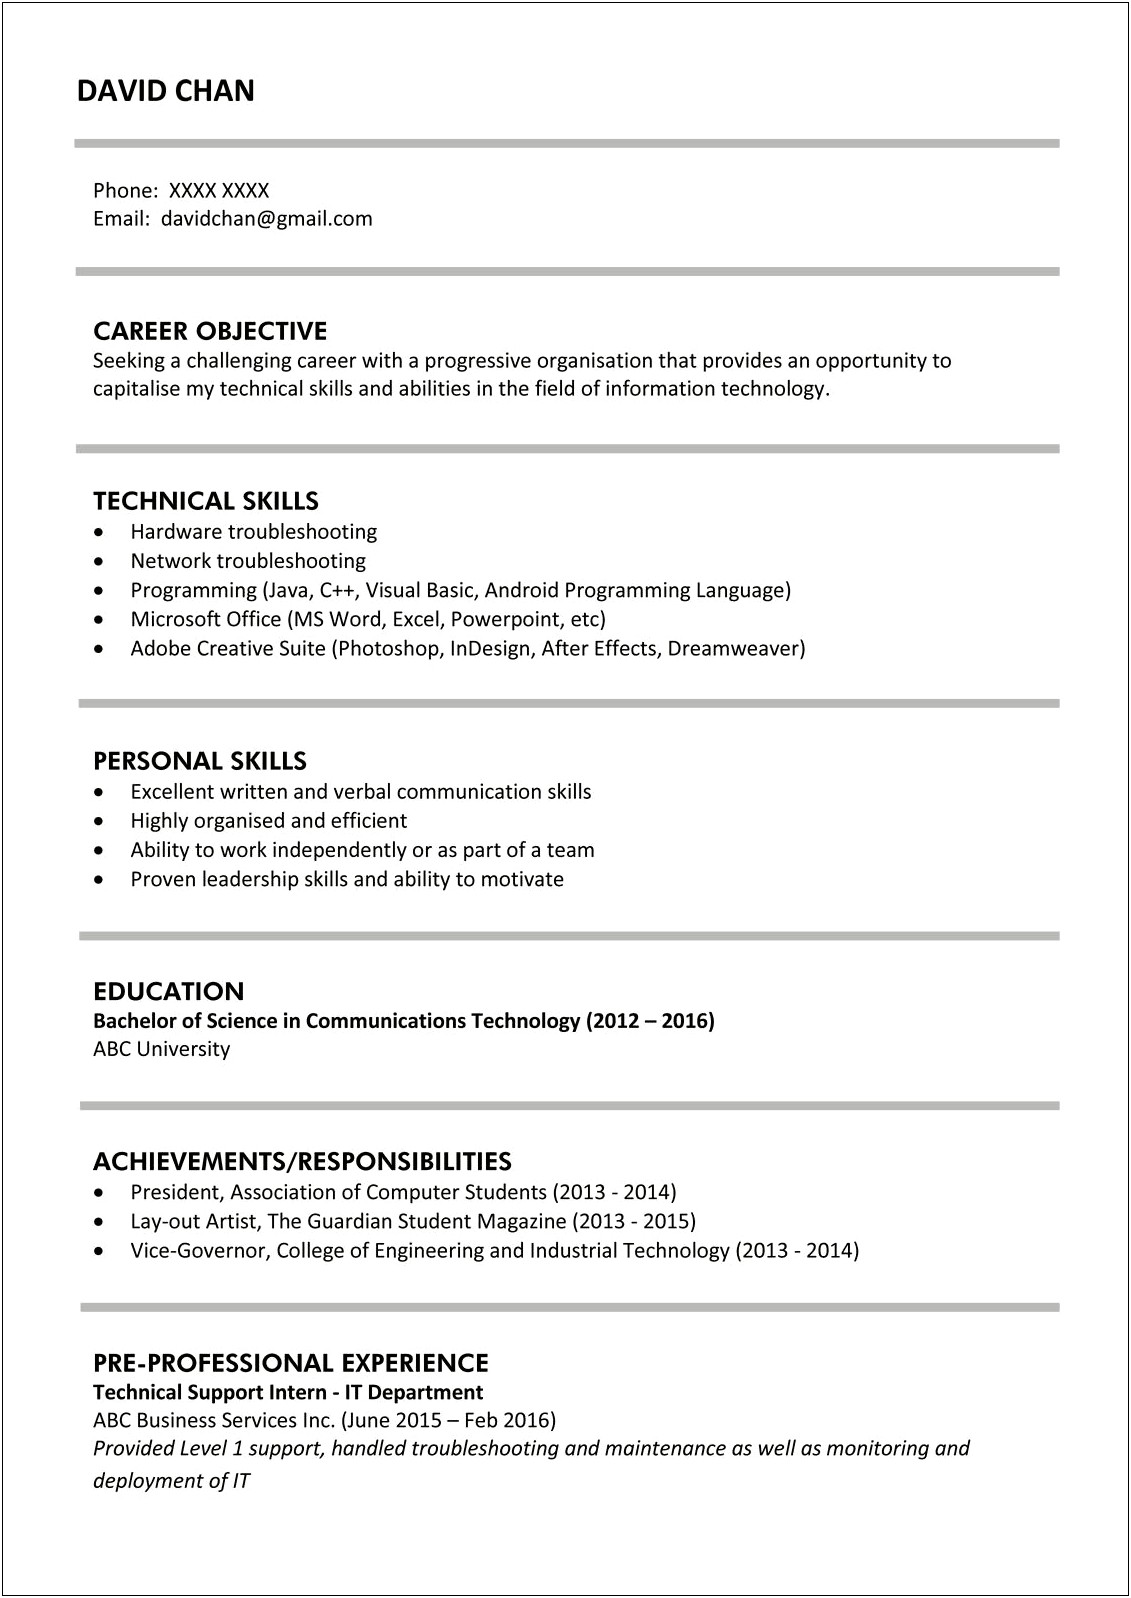 Resume Objectives Sample For Information Technology